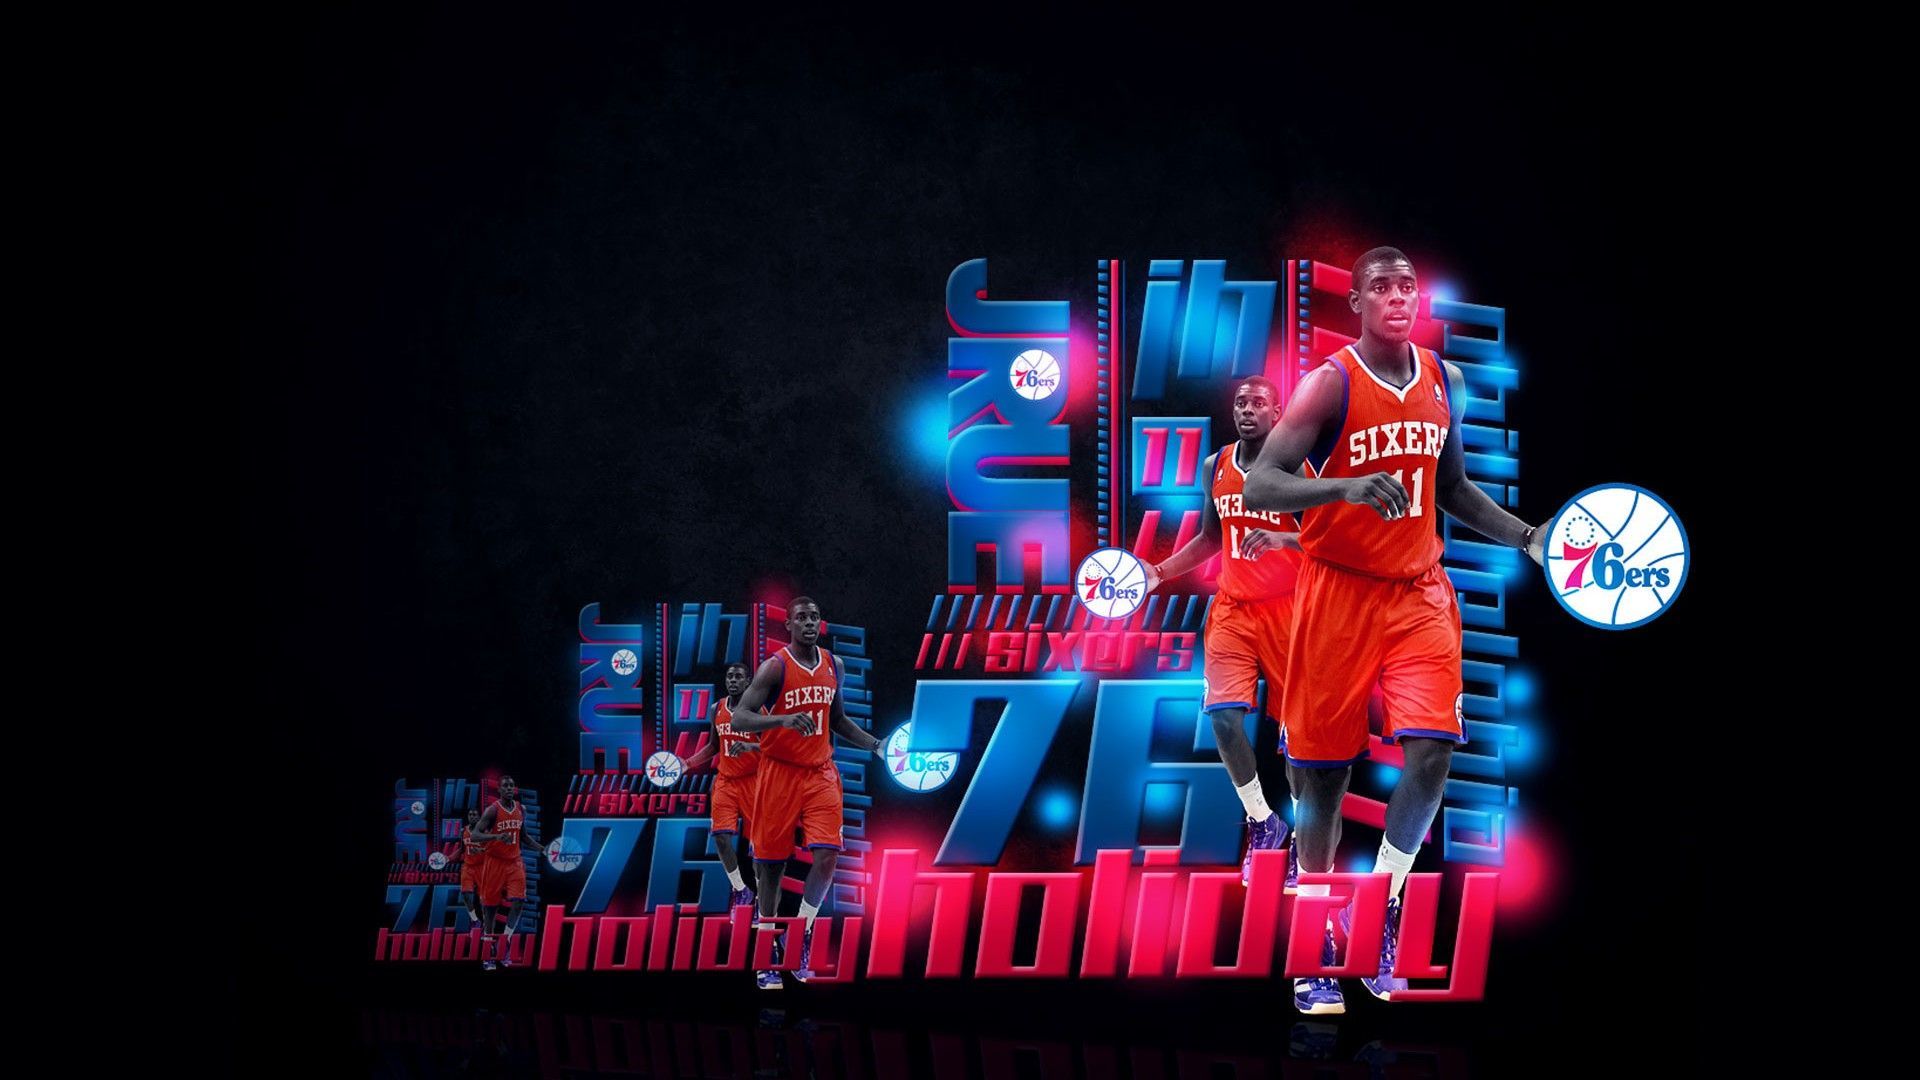 Philadelphia 76ers NBA For Mac Wallpaper Basketball Wallpaper. Basketball wallpaper, Mac wallpaper, Basketball wallpaper hd